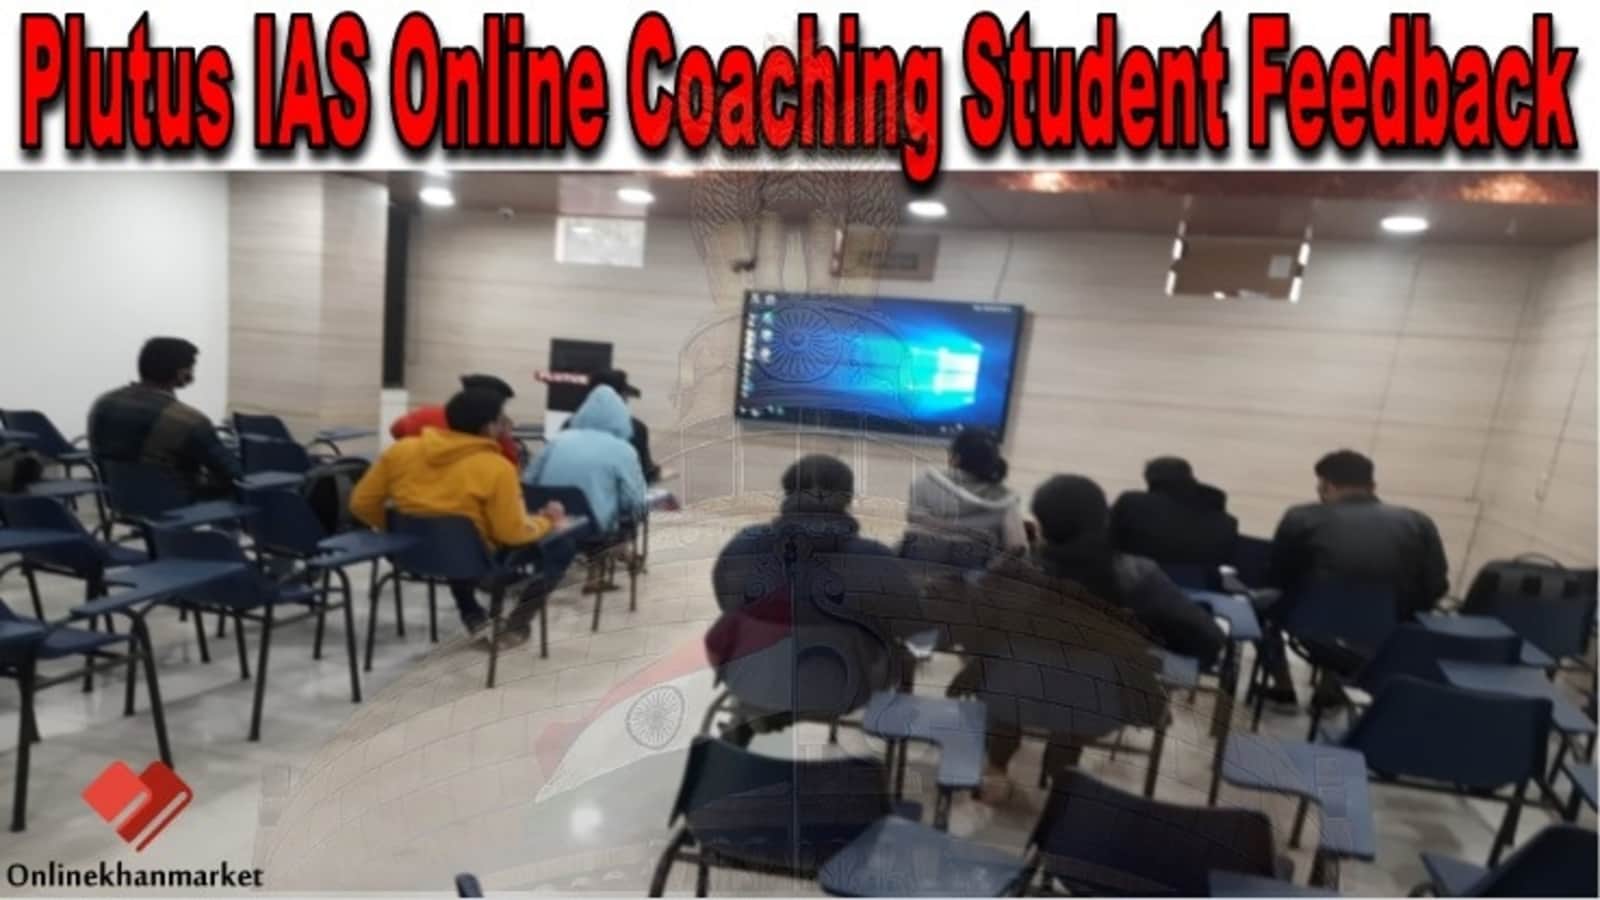 Plutus IAS Online Coaching Student Feedback